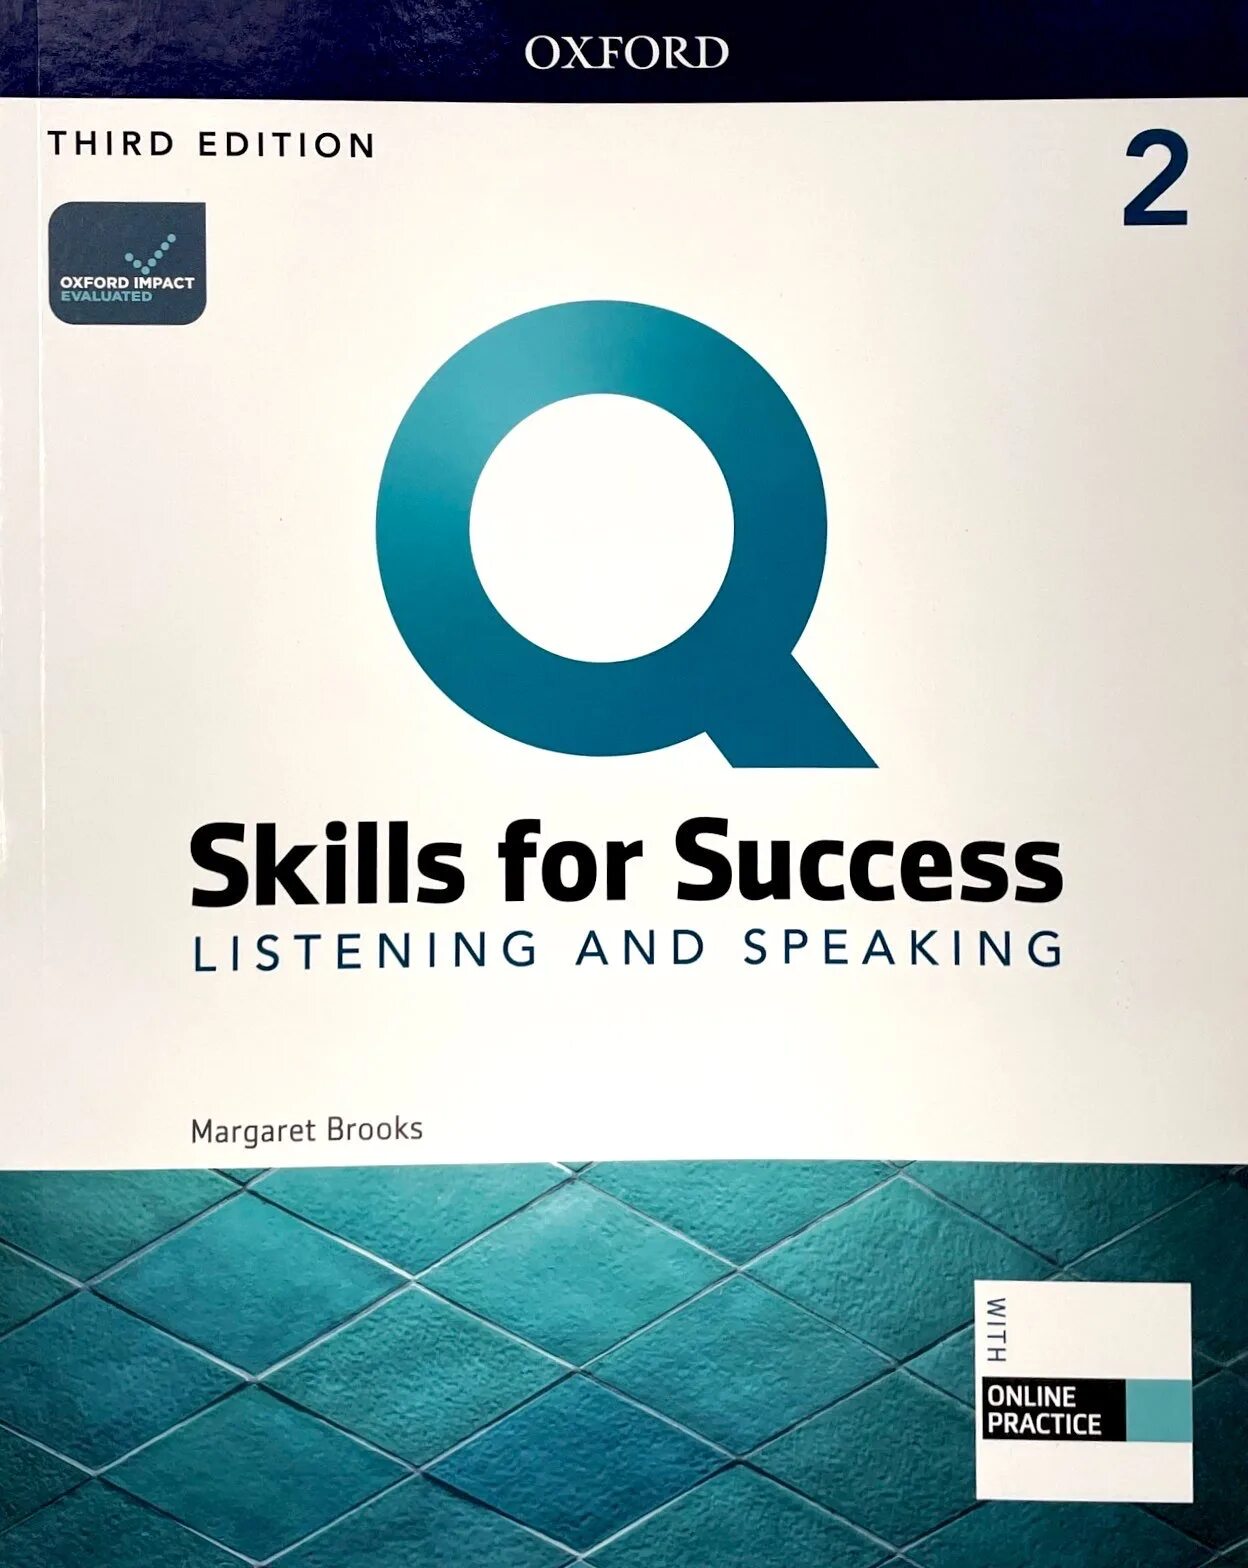 Speak 3rd. Q skills for success 2. Q skills for success. Q skills for success Listening. Q skills for success Listening and speaking.